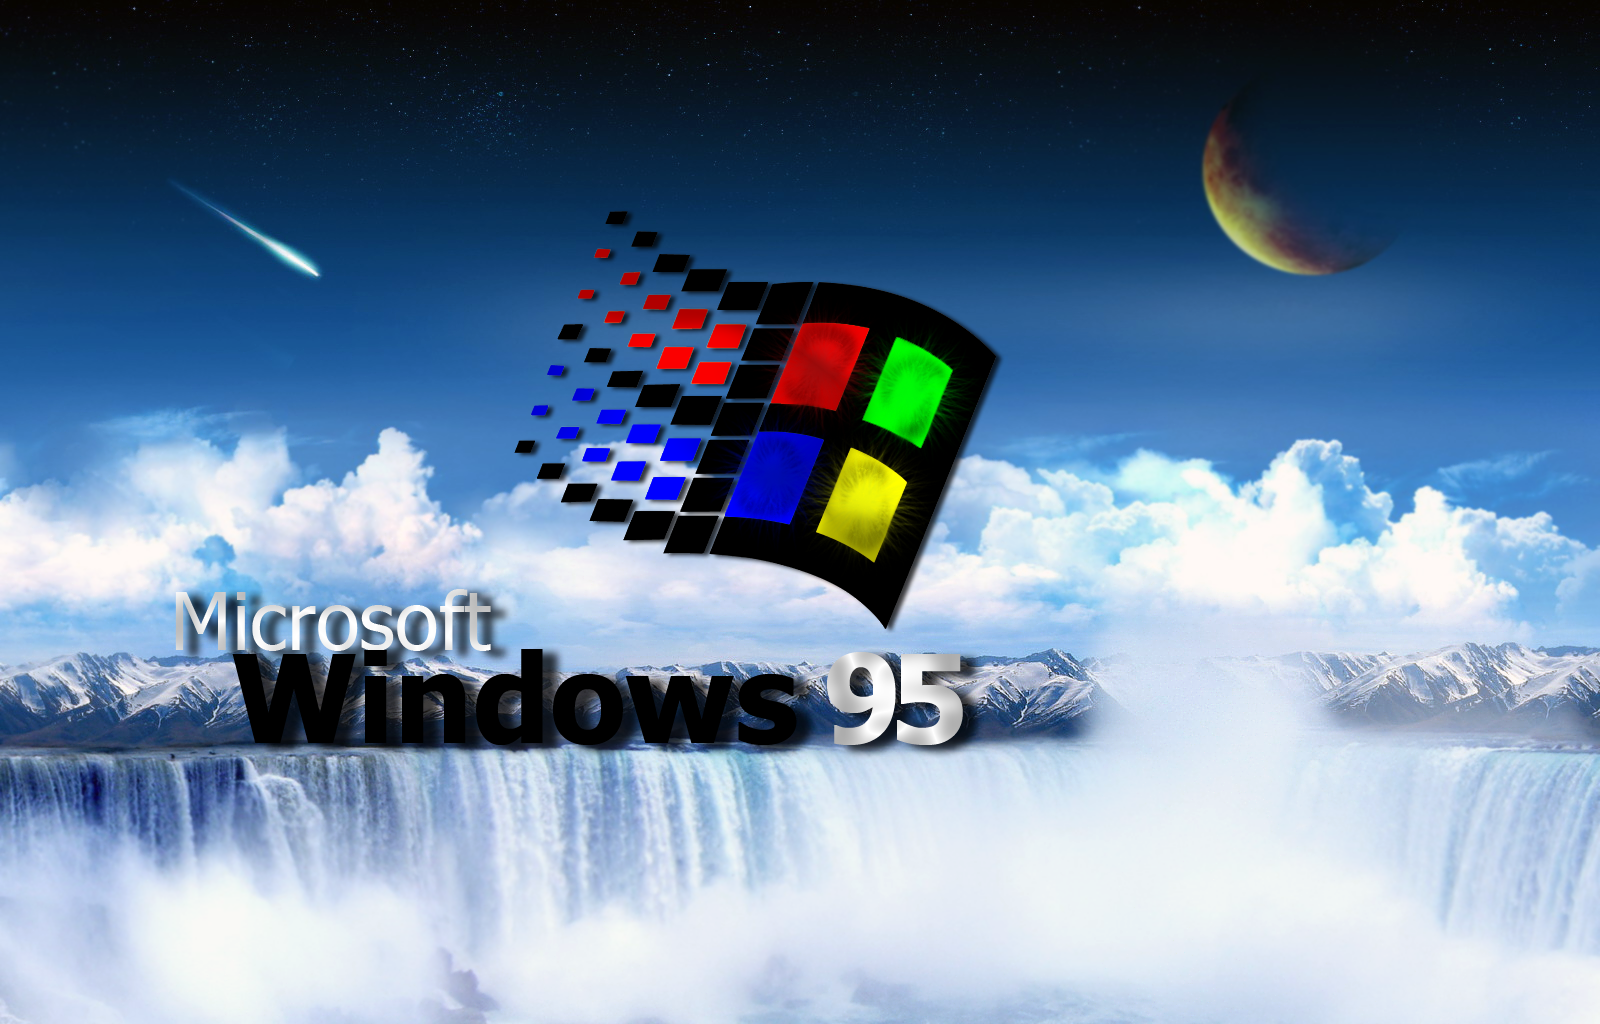 Windows 95 Backgrounds Windows 95 wallpaper